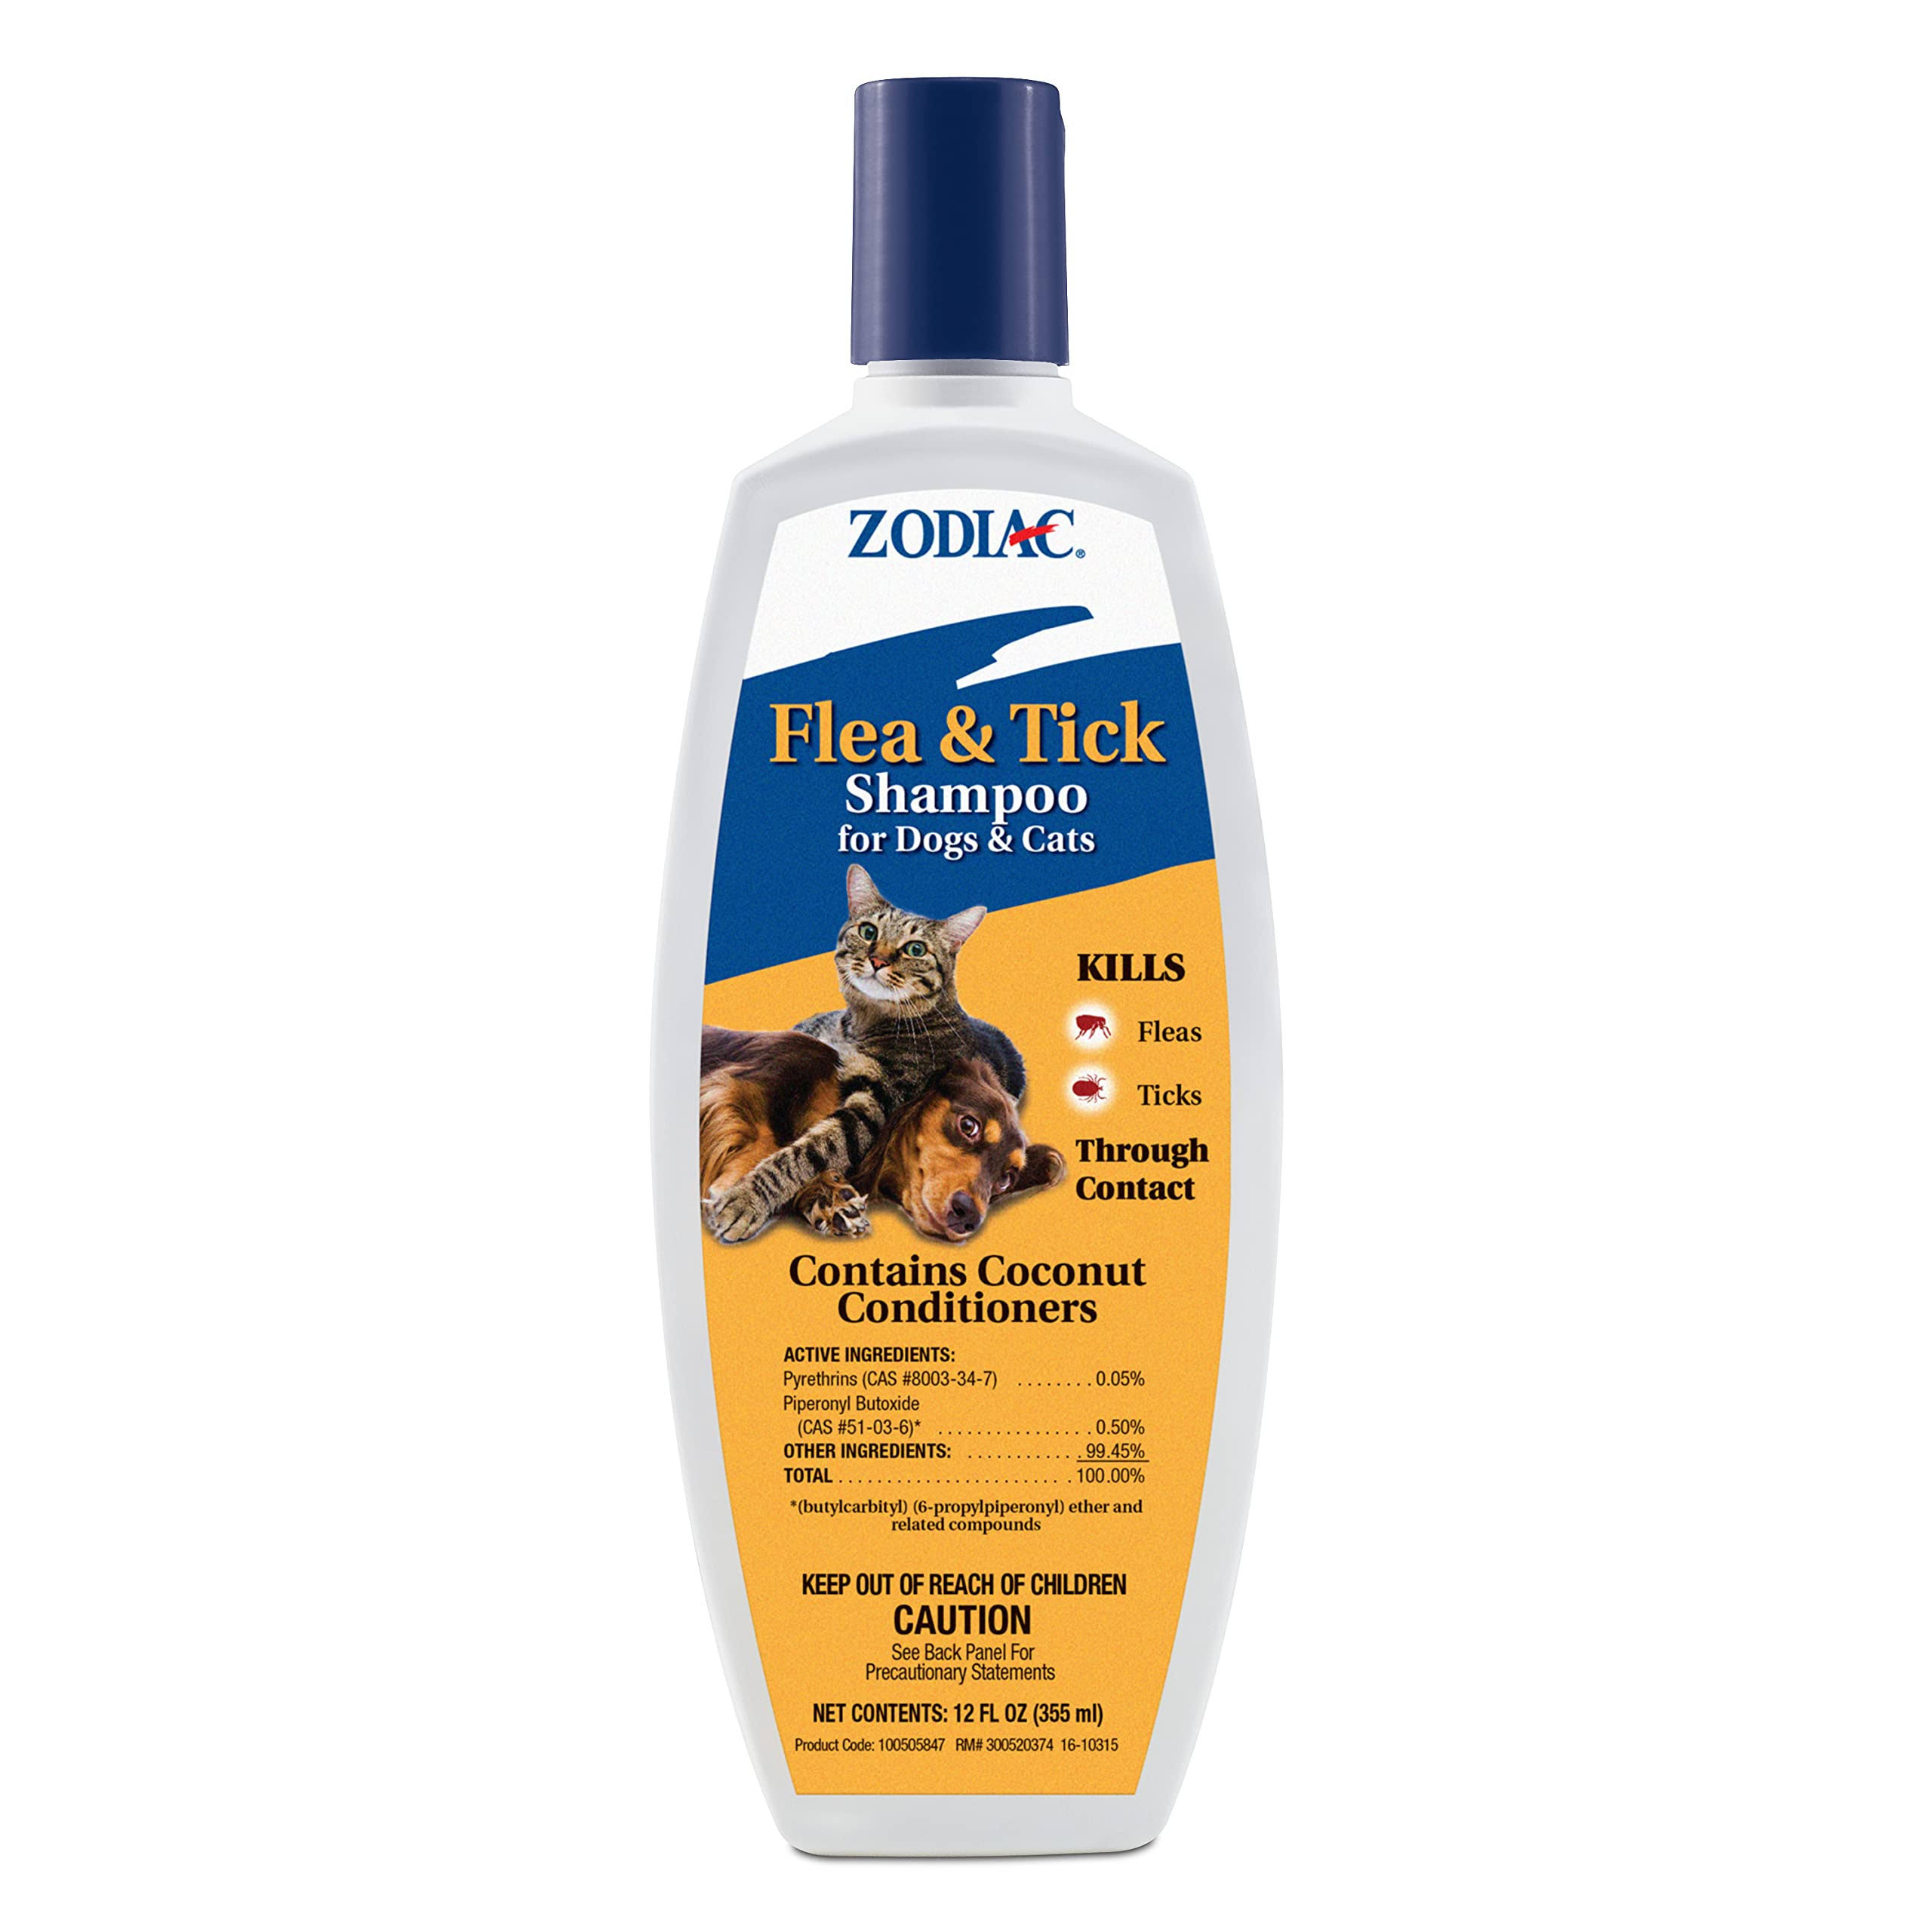 Zodiac Flea and Tick Shampoo for Dogs and Cats - 12oz